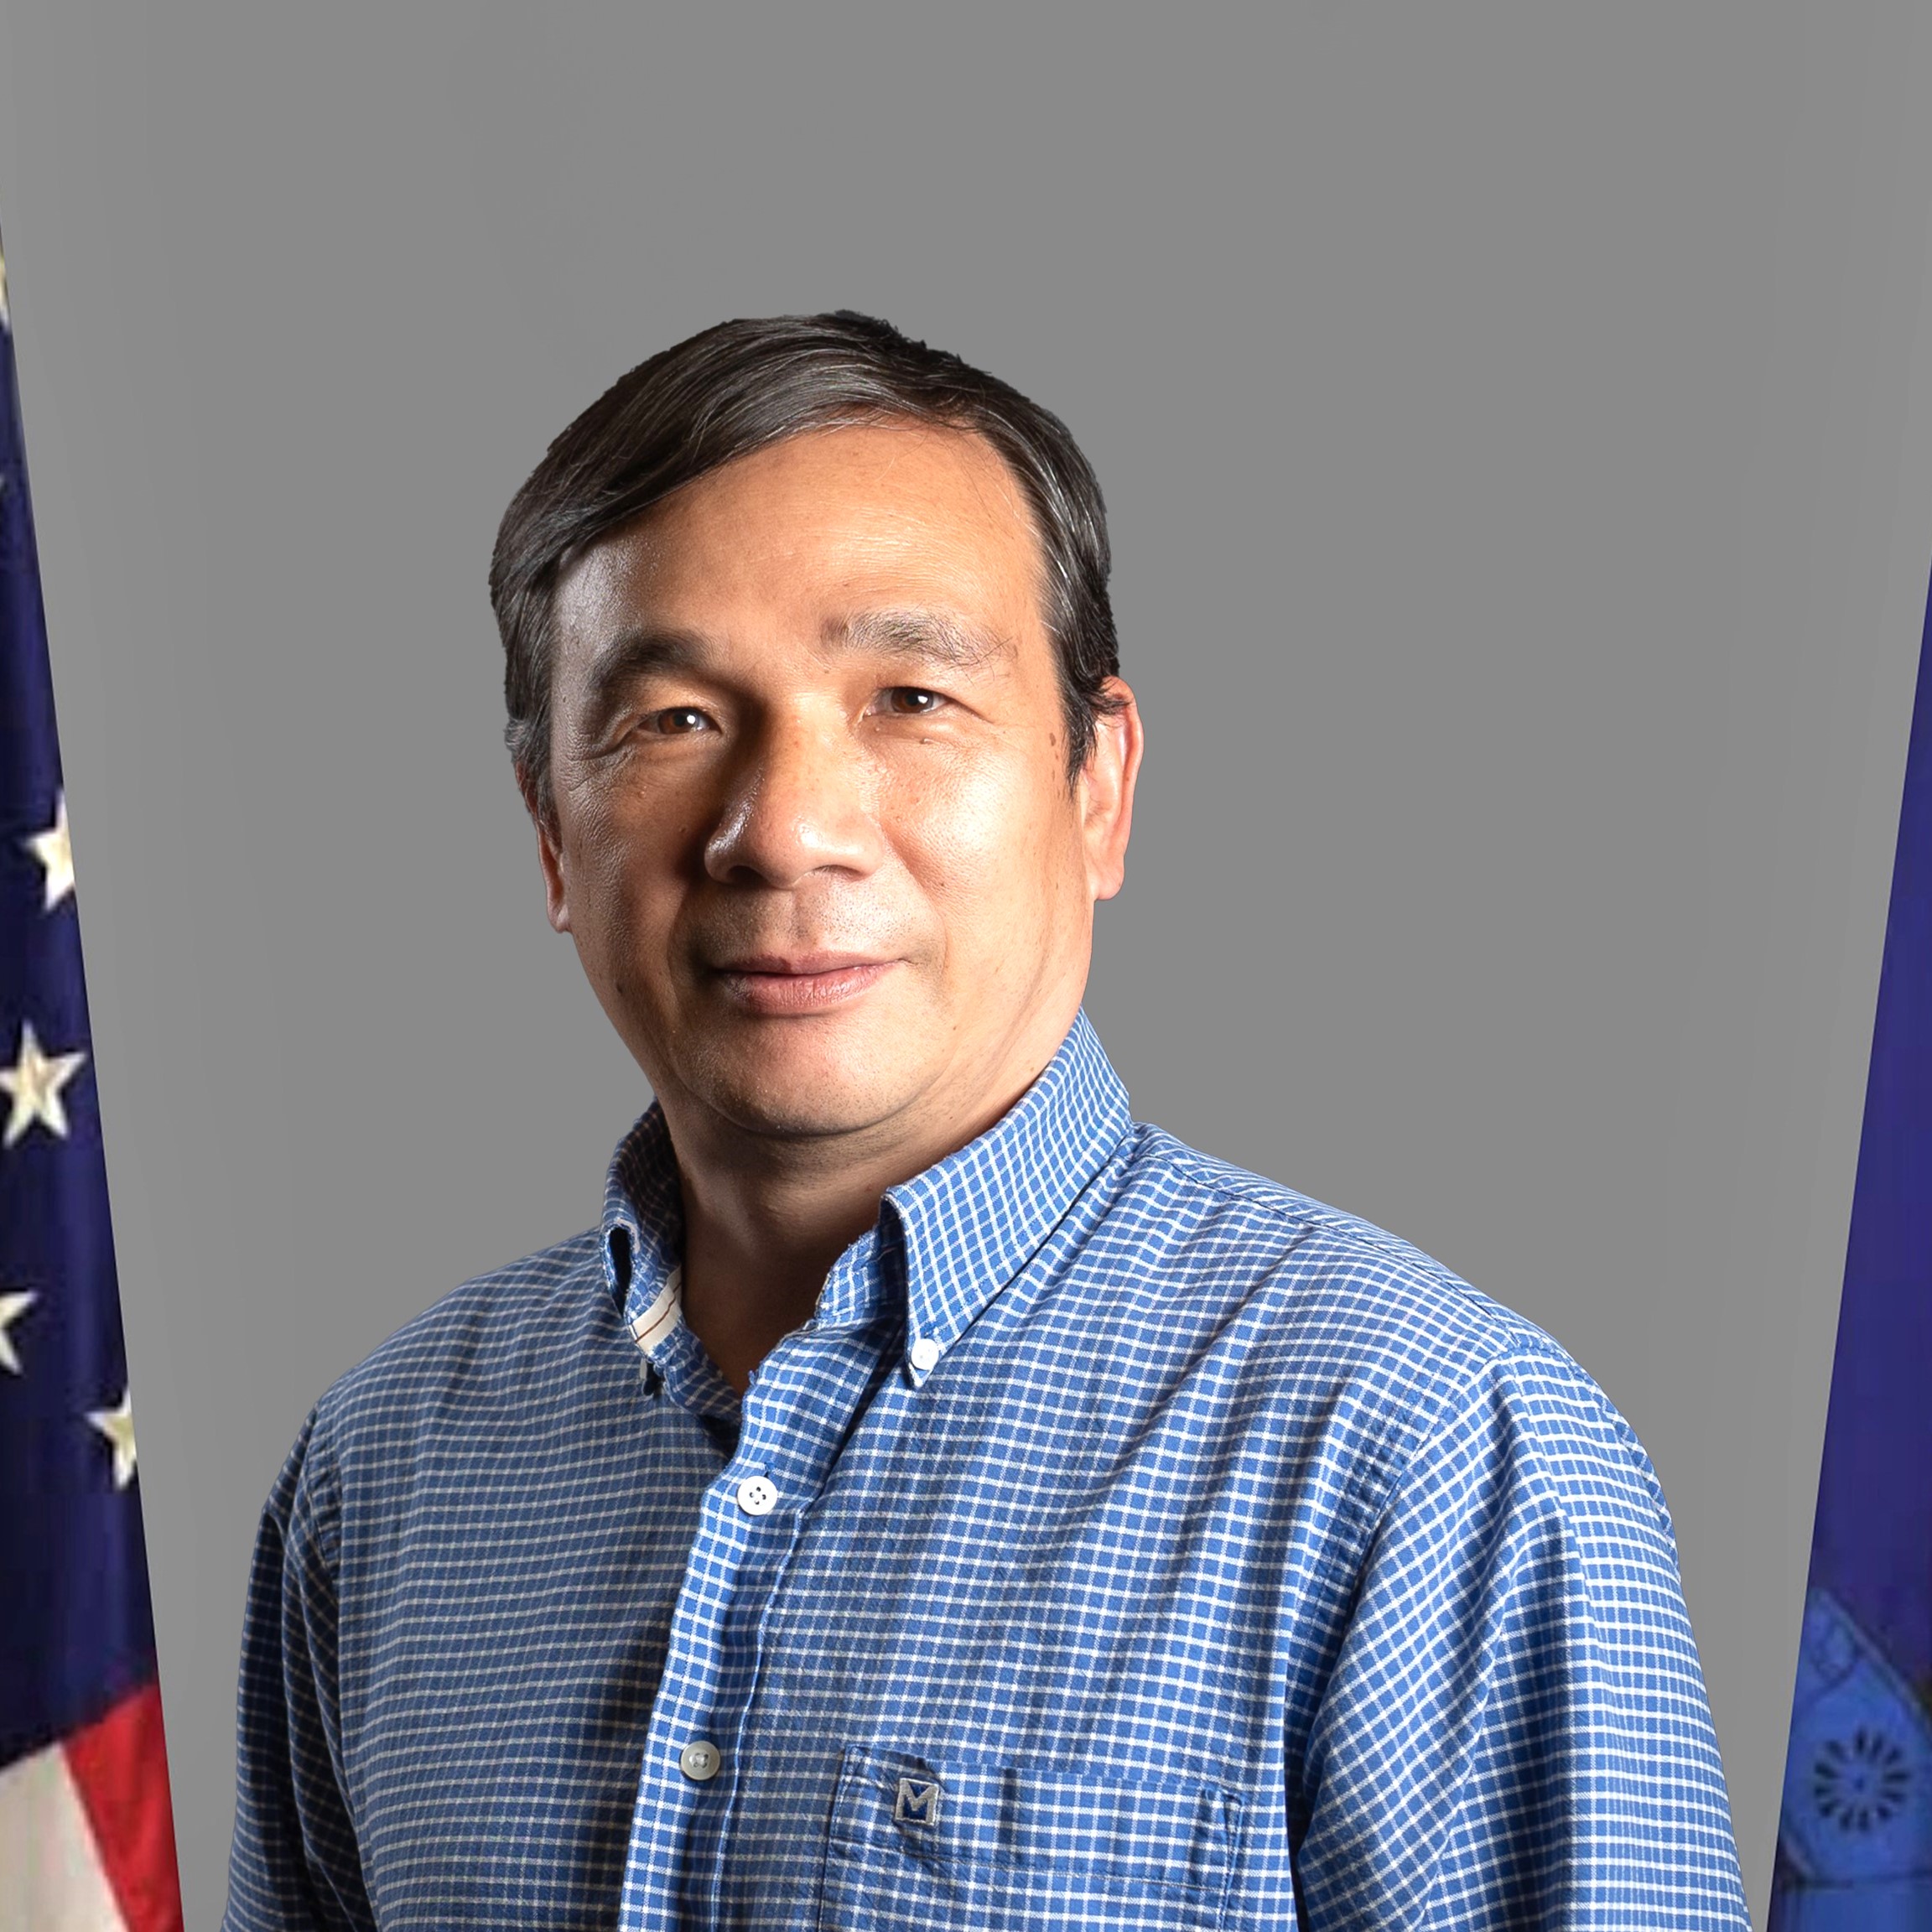 Assessor Frank Xu